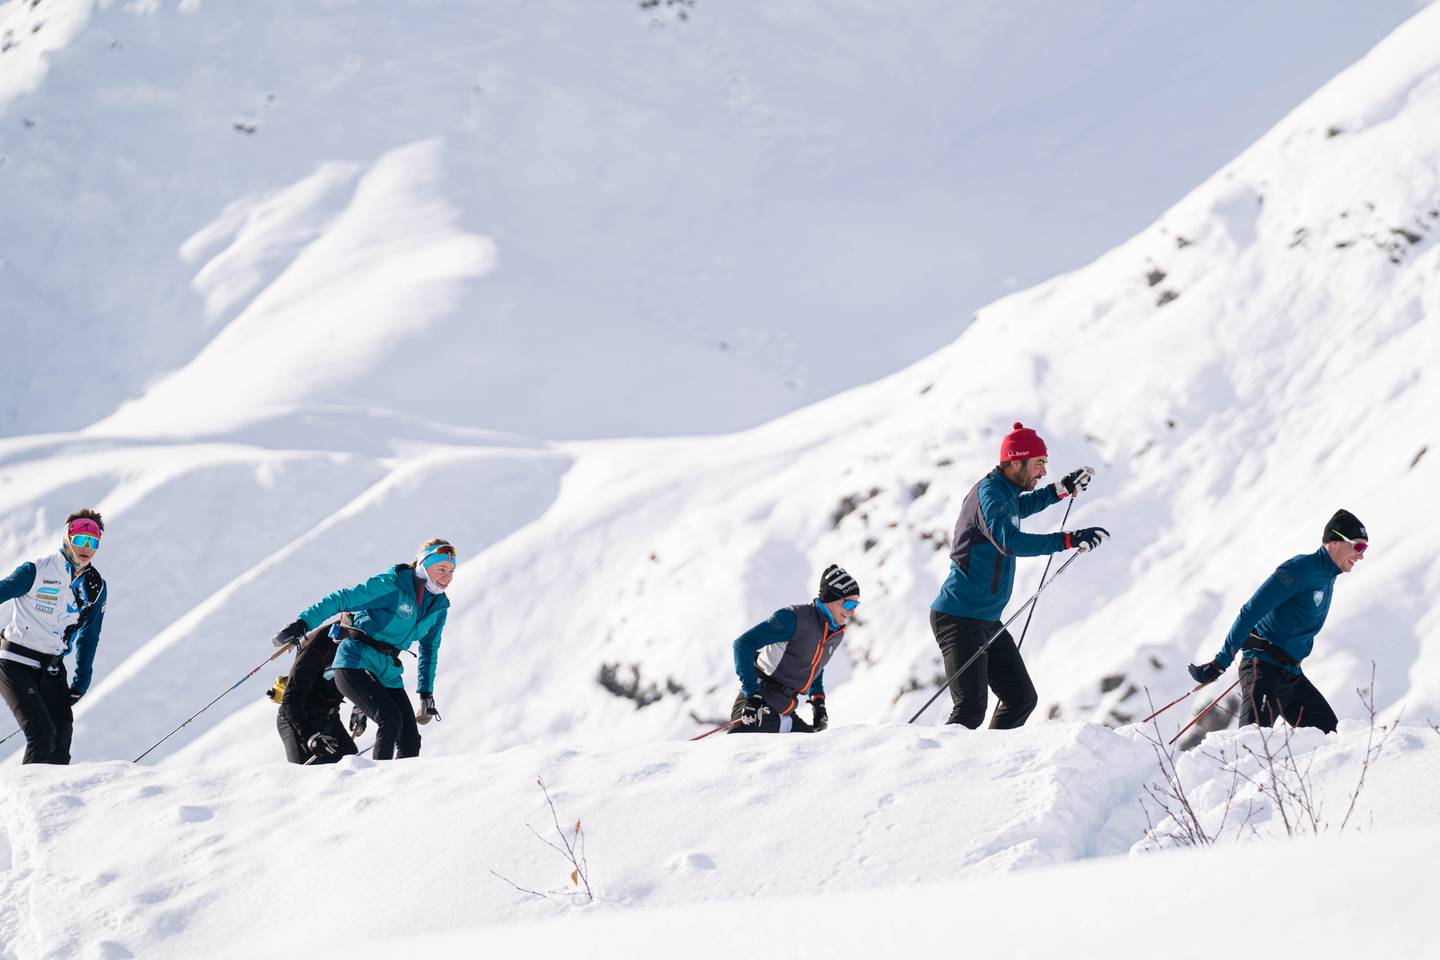 hatcher pass, skiing, snow, winter